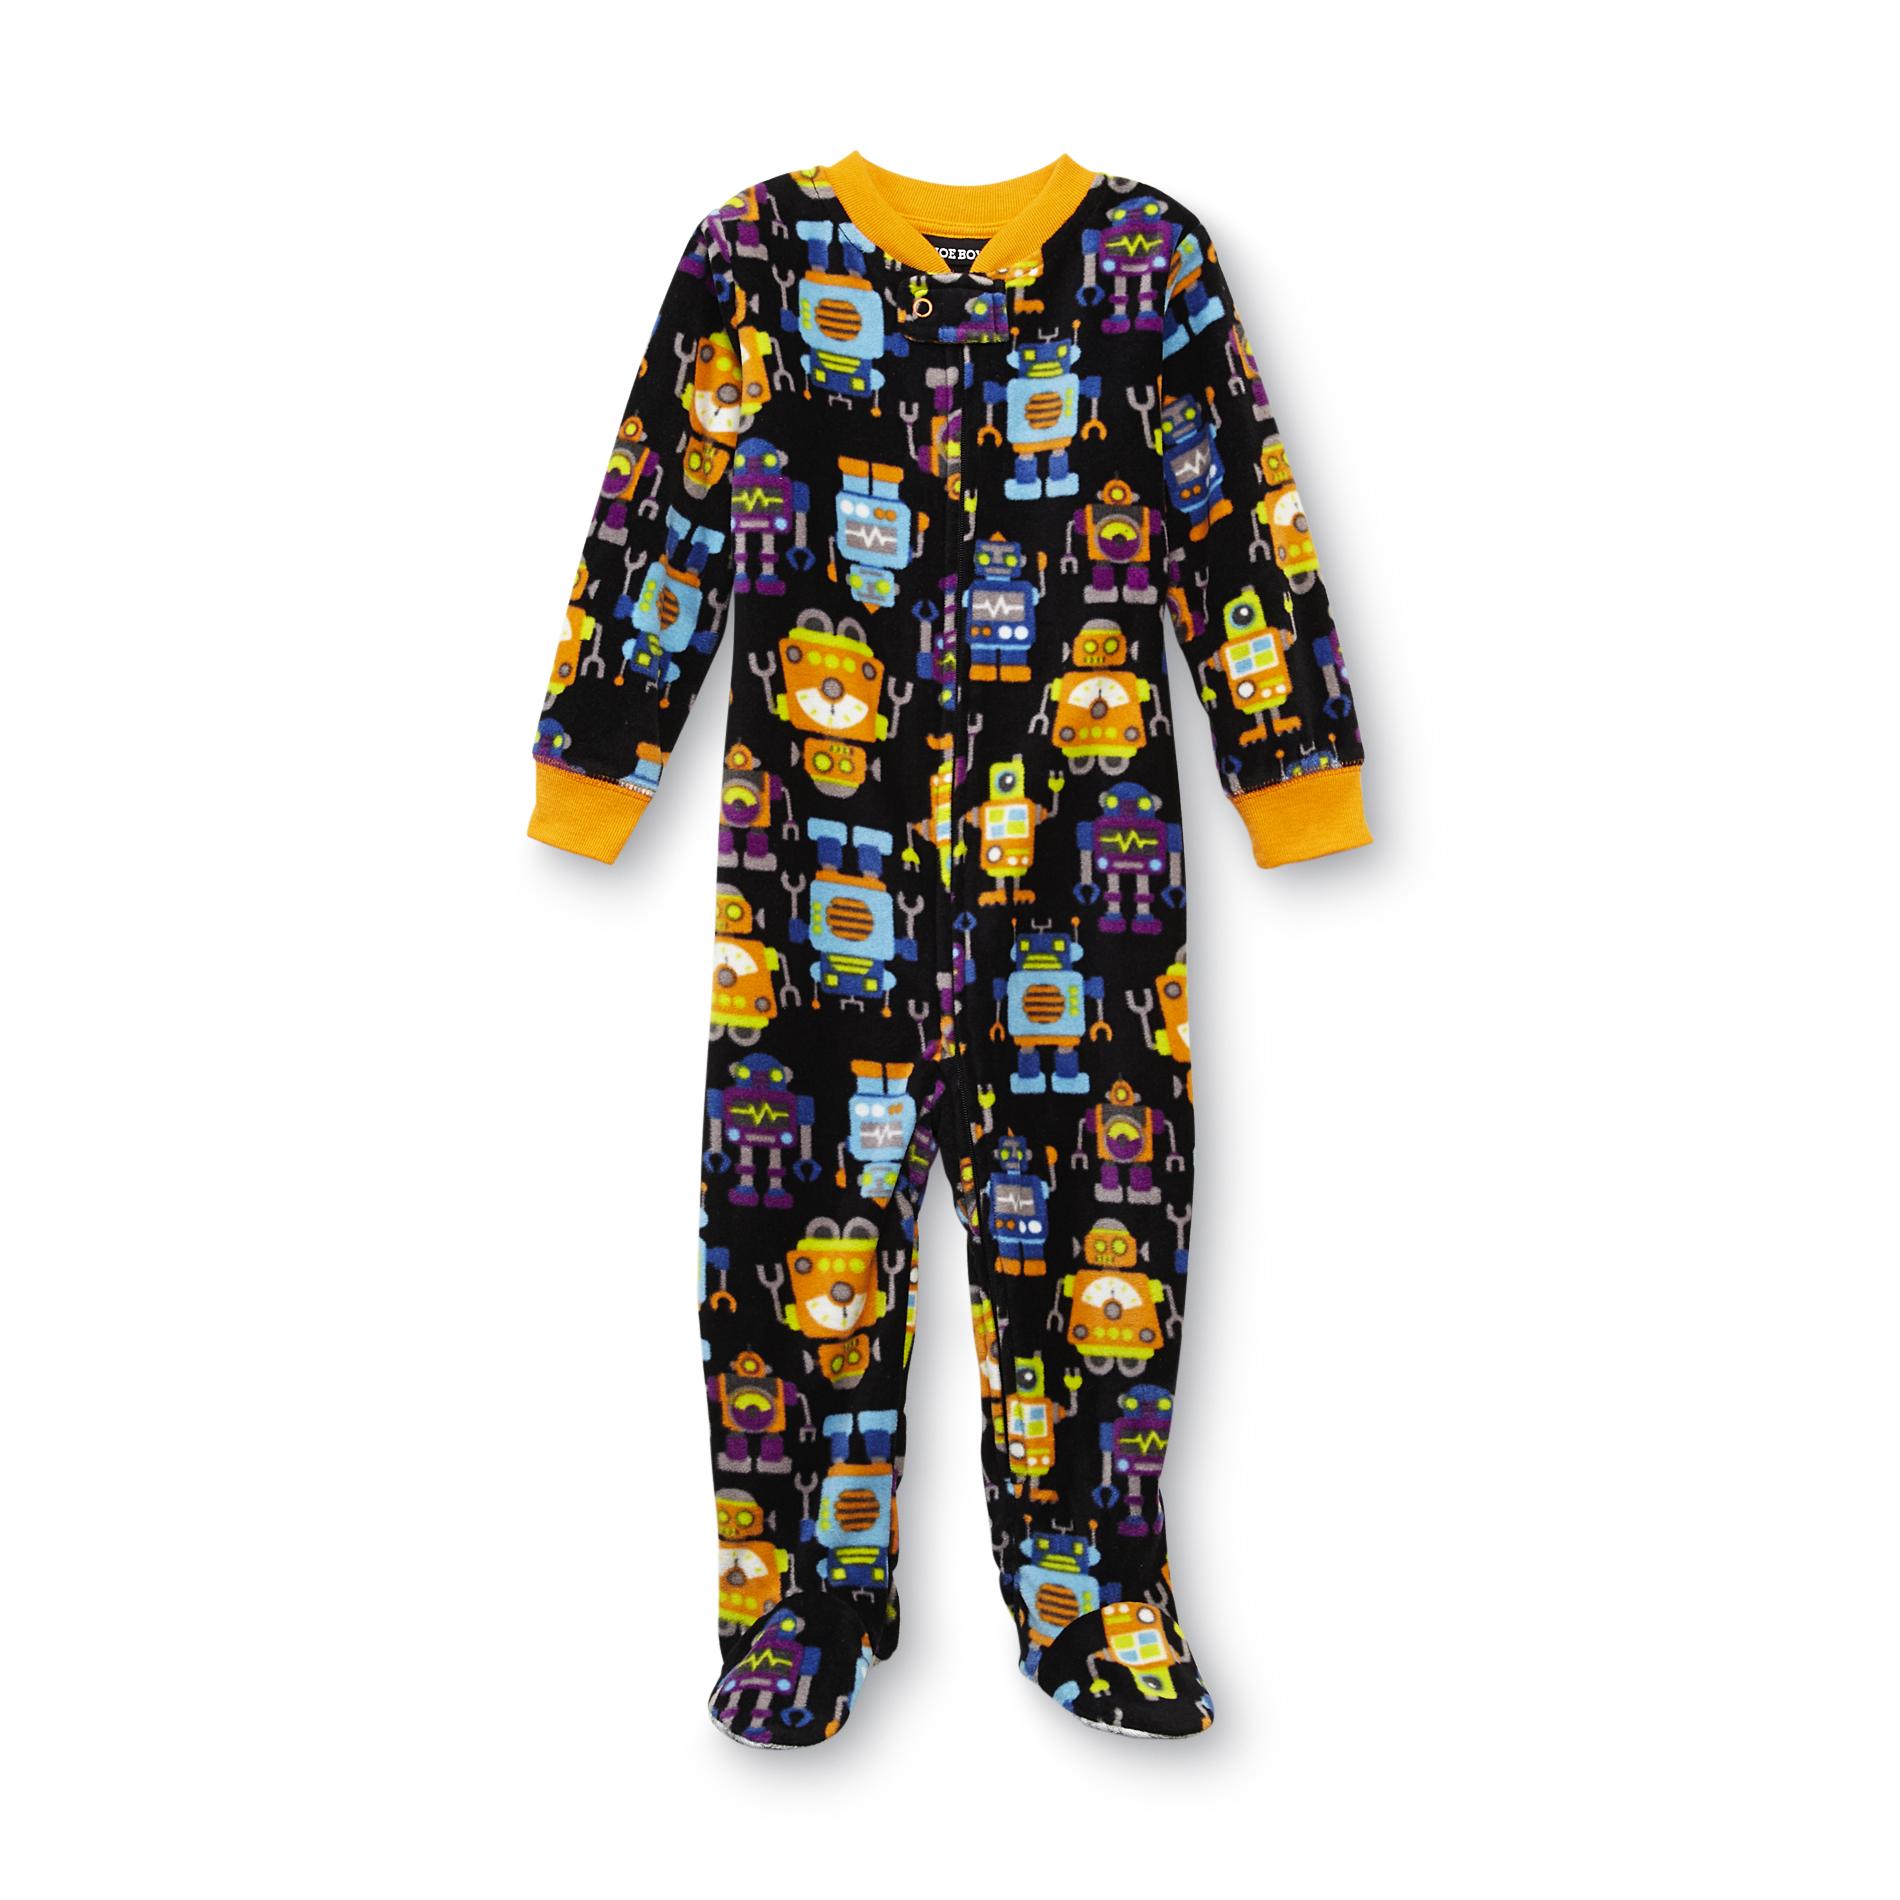 Joe Boxer Infant & Toddler Boy's Footed Sleeper Pajamas - Robots